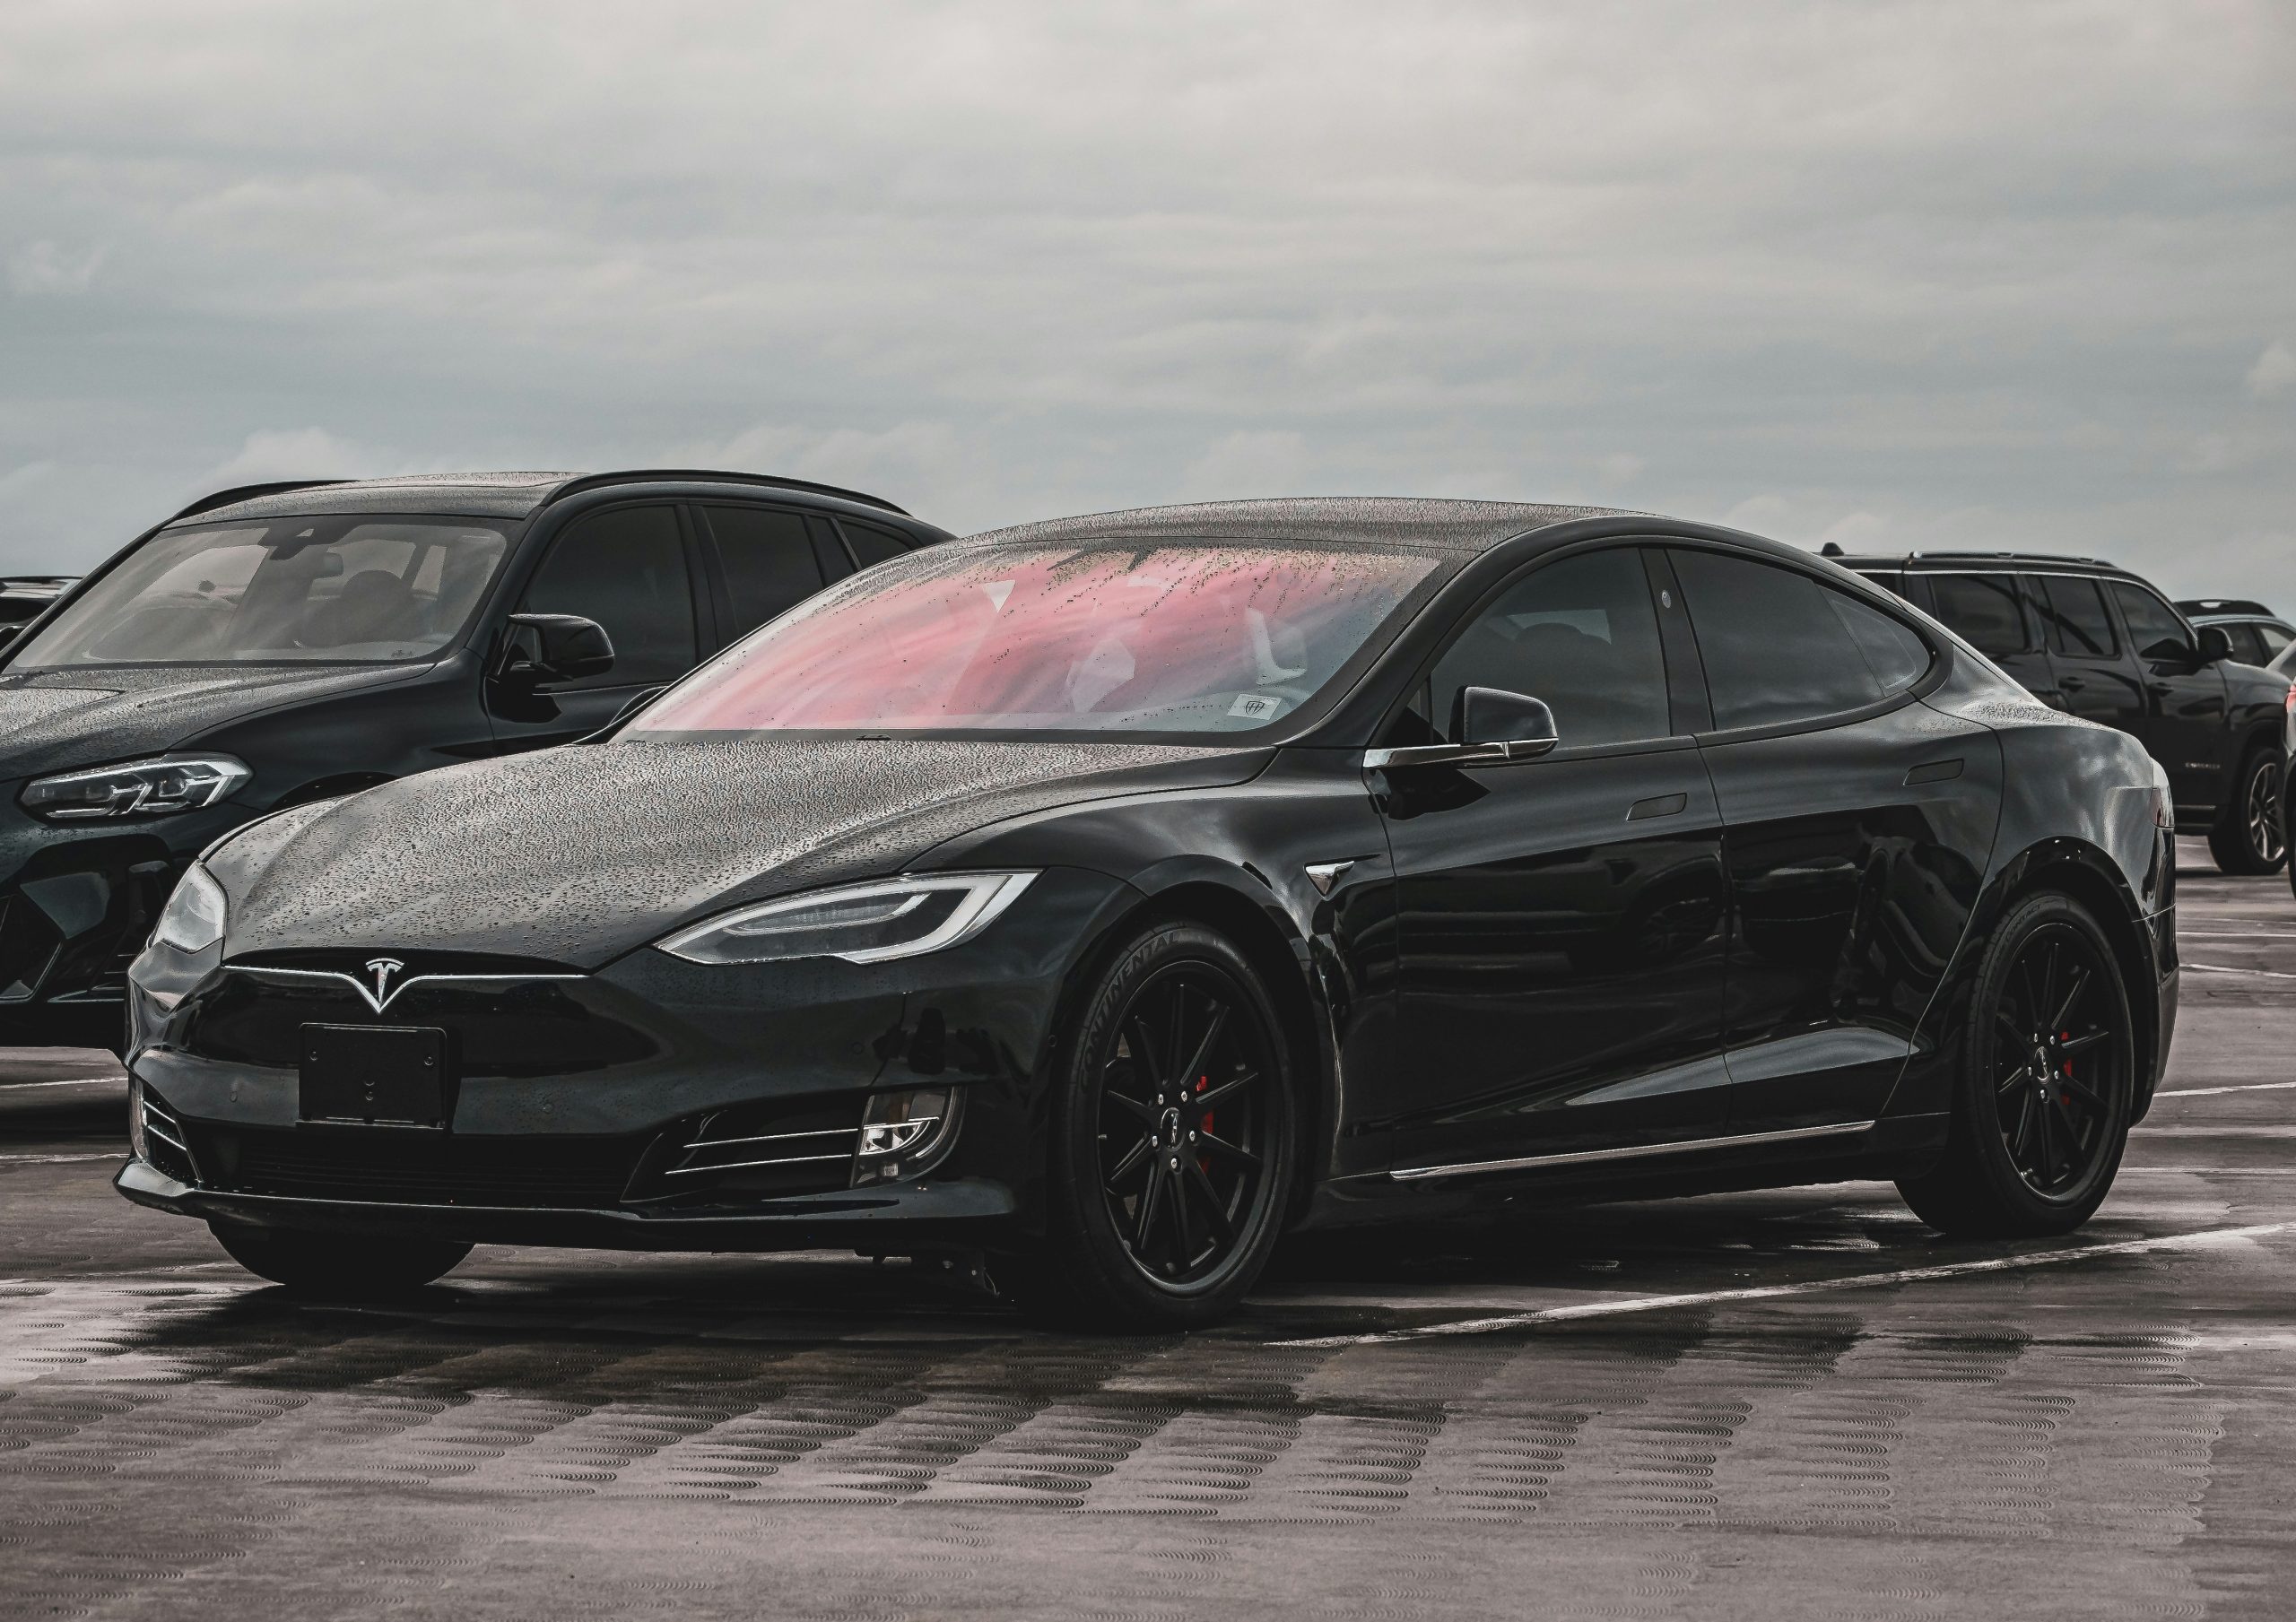 Solid Black Tesla Model S in a Parking Lot